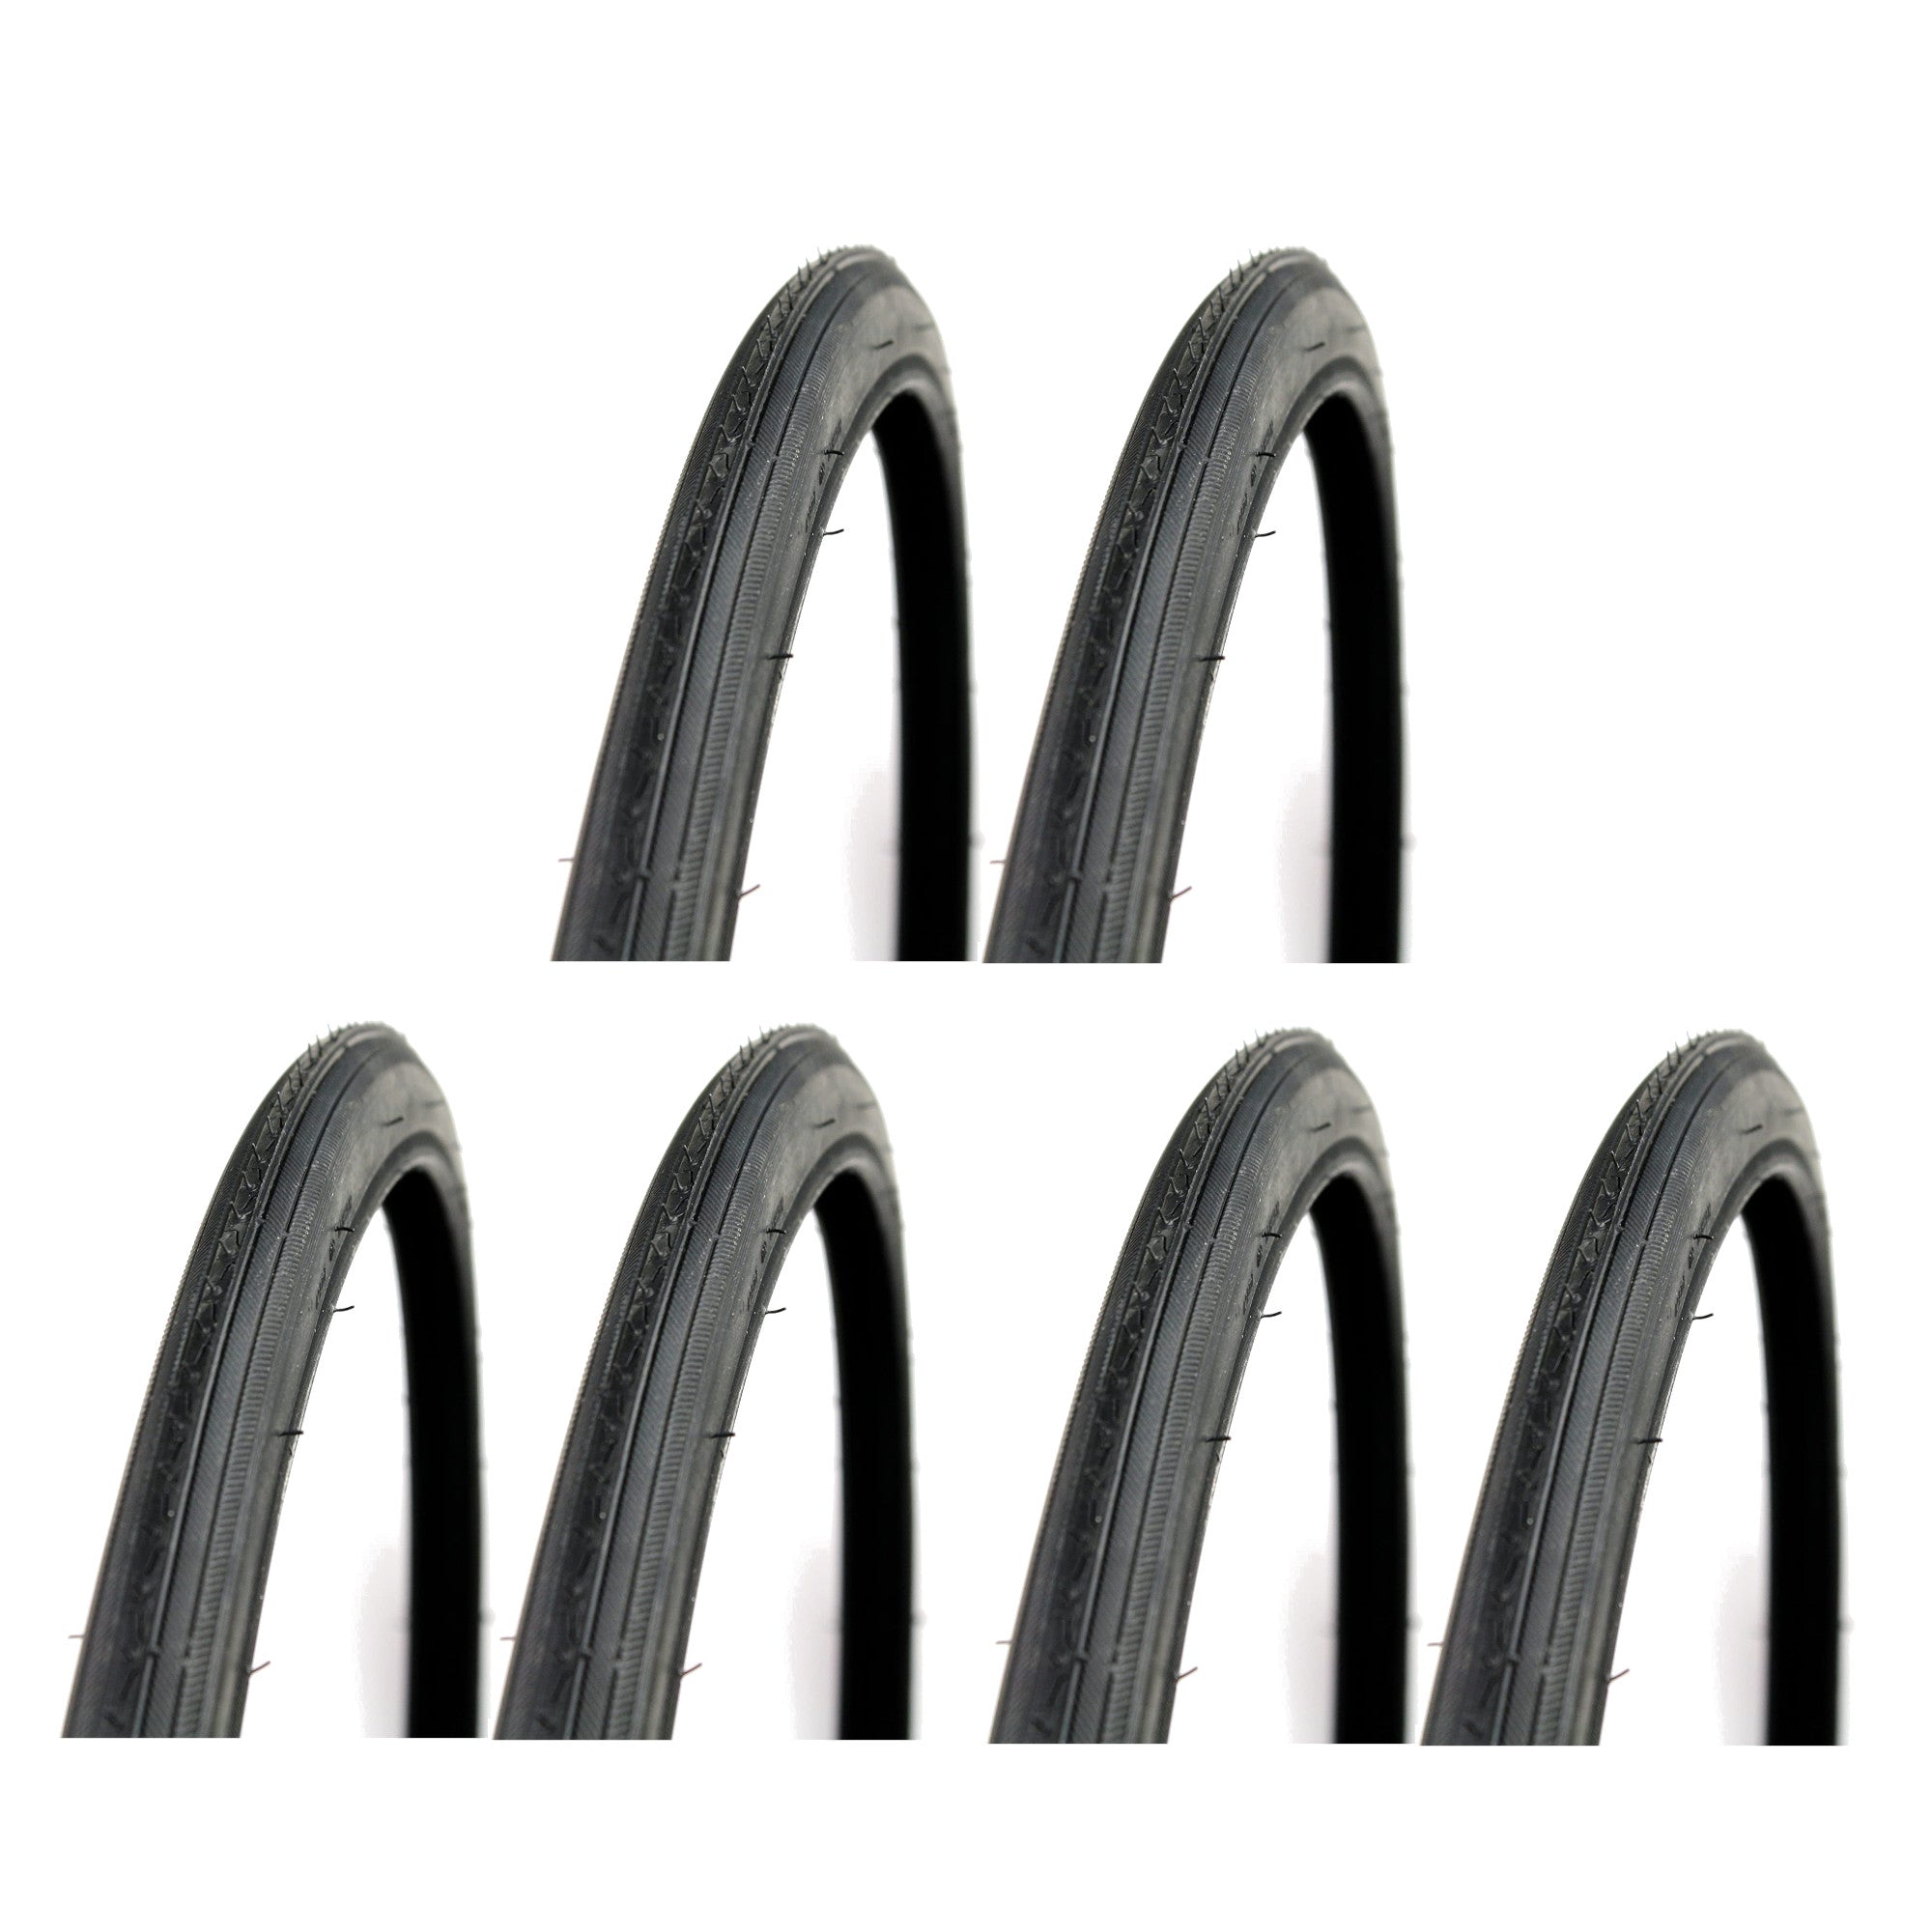 Six Six Kenda blackwall tires